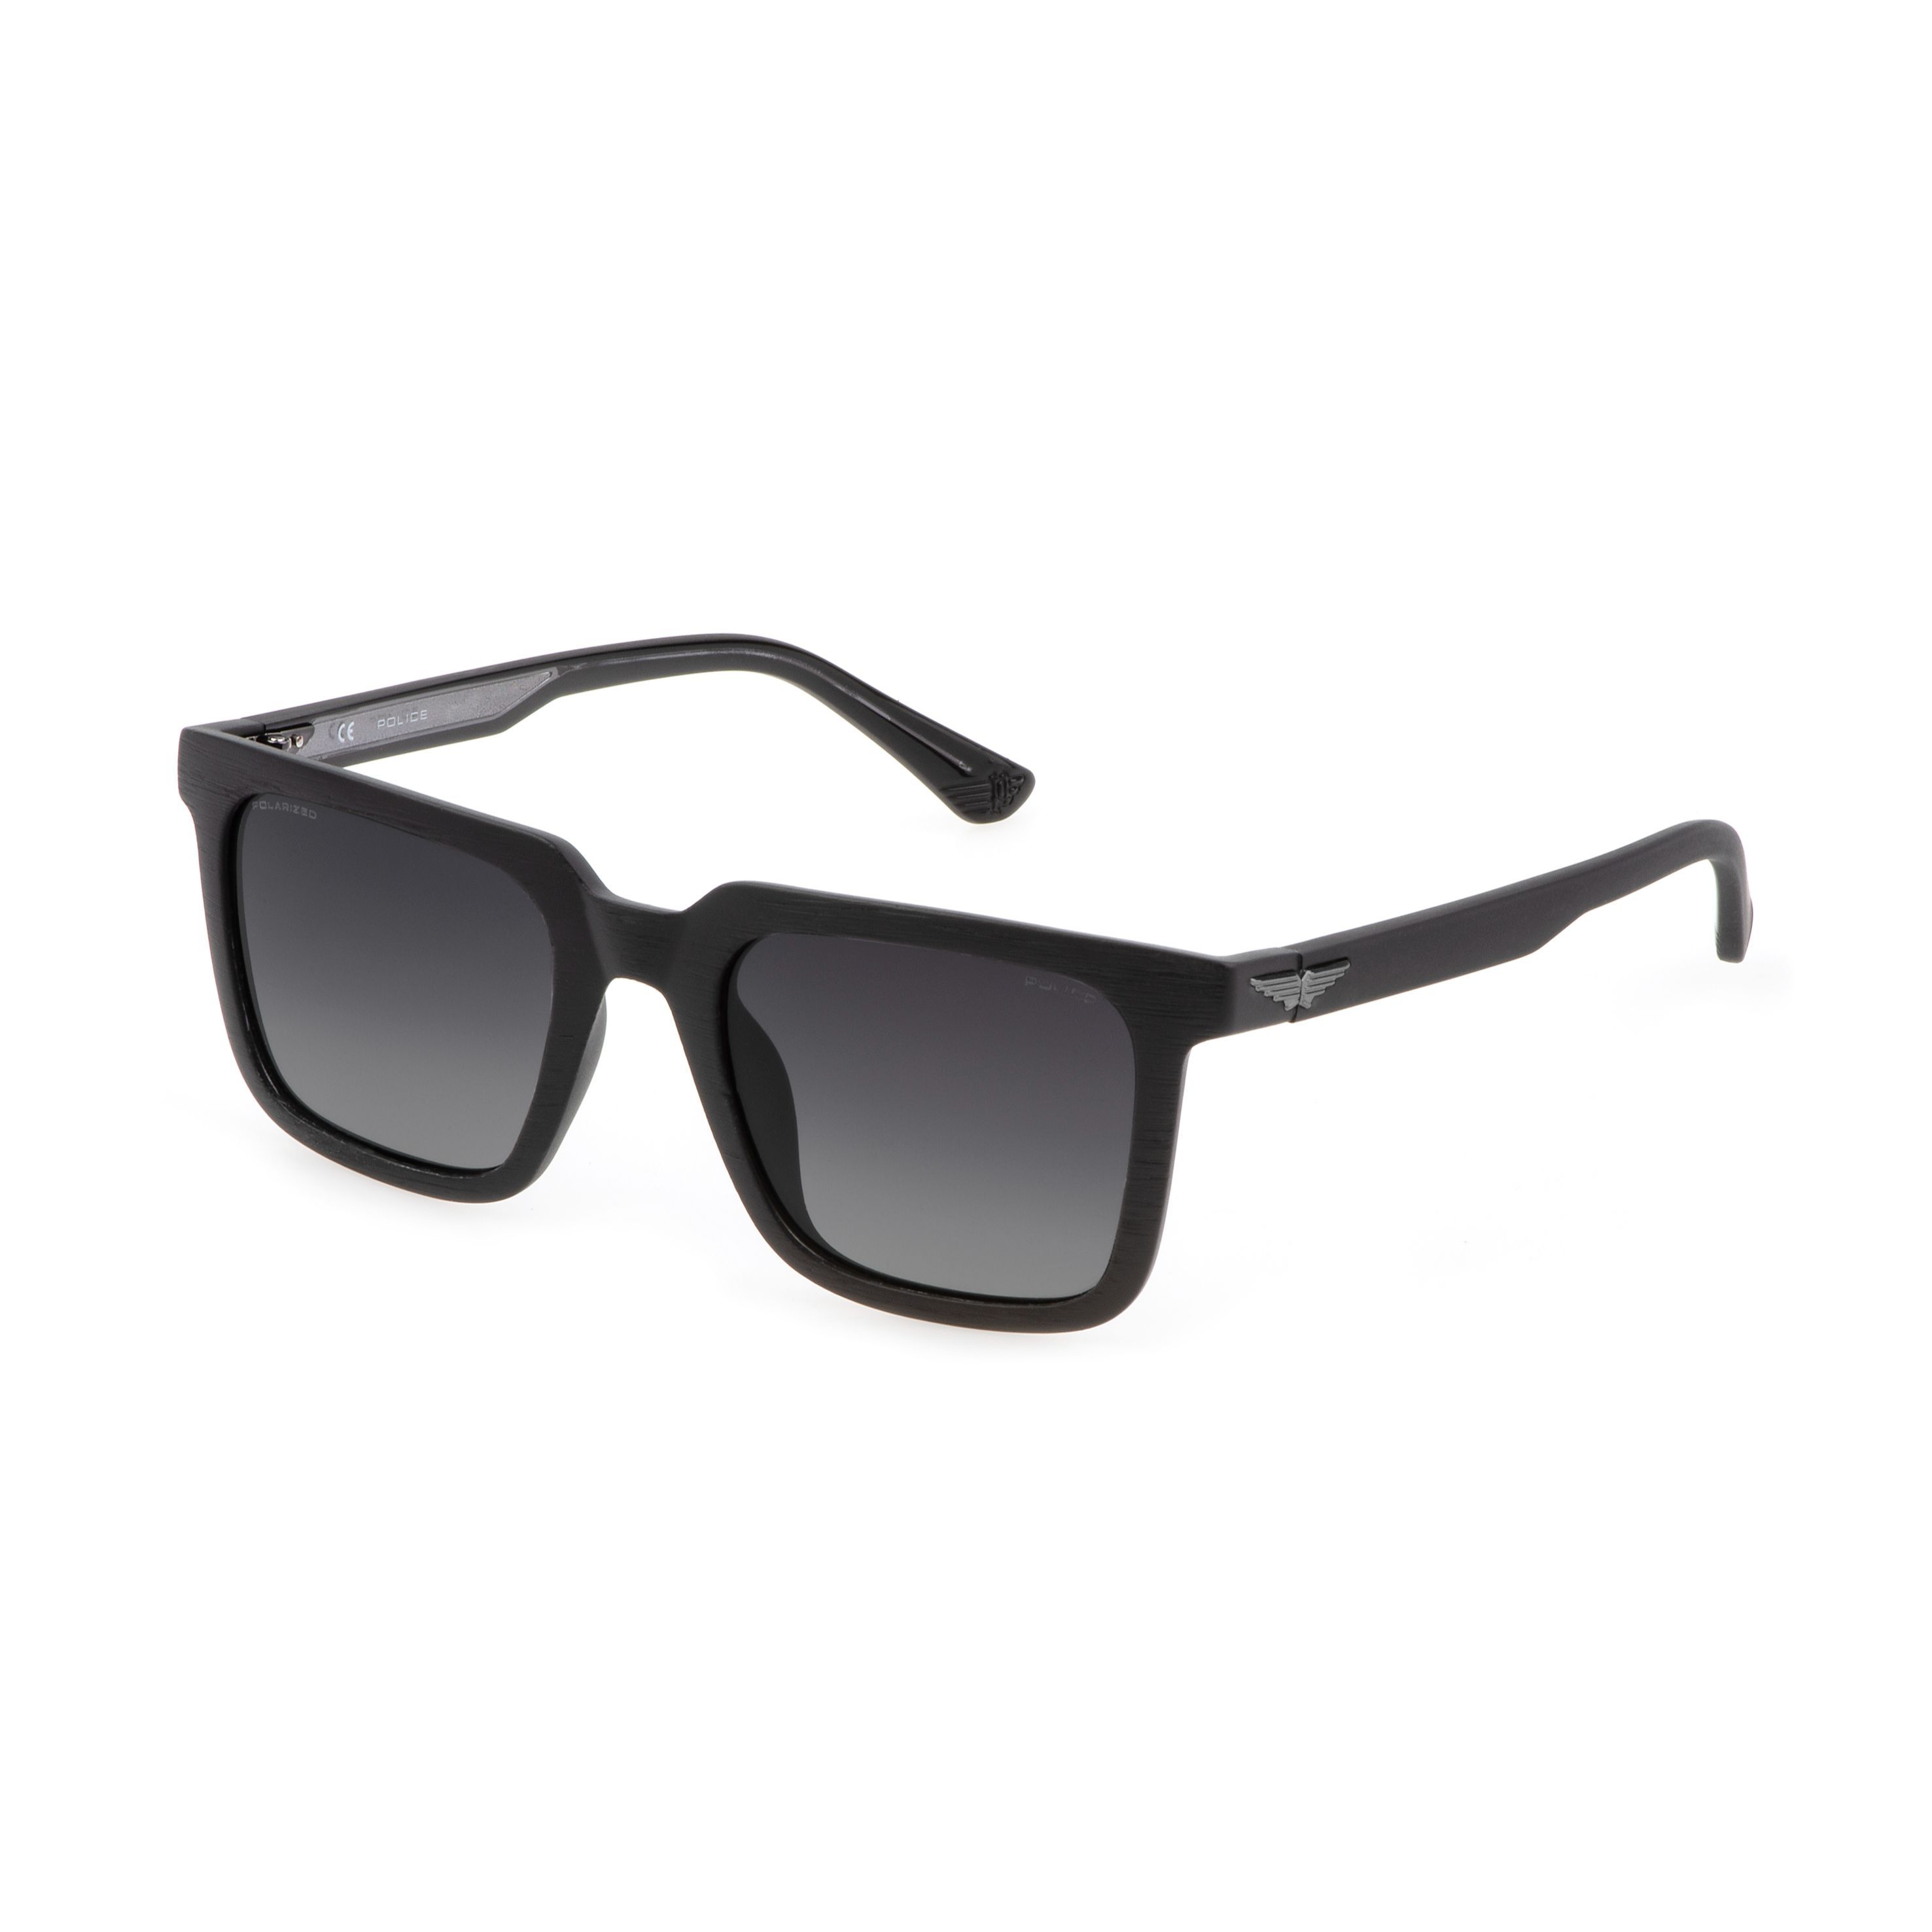 SPLF15M Square Sunglasses GLAP - size 52